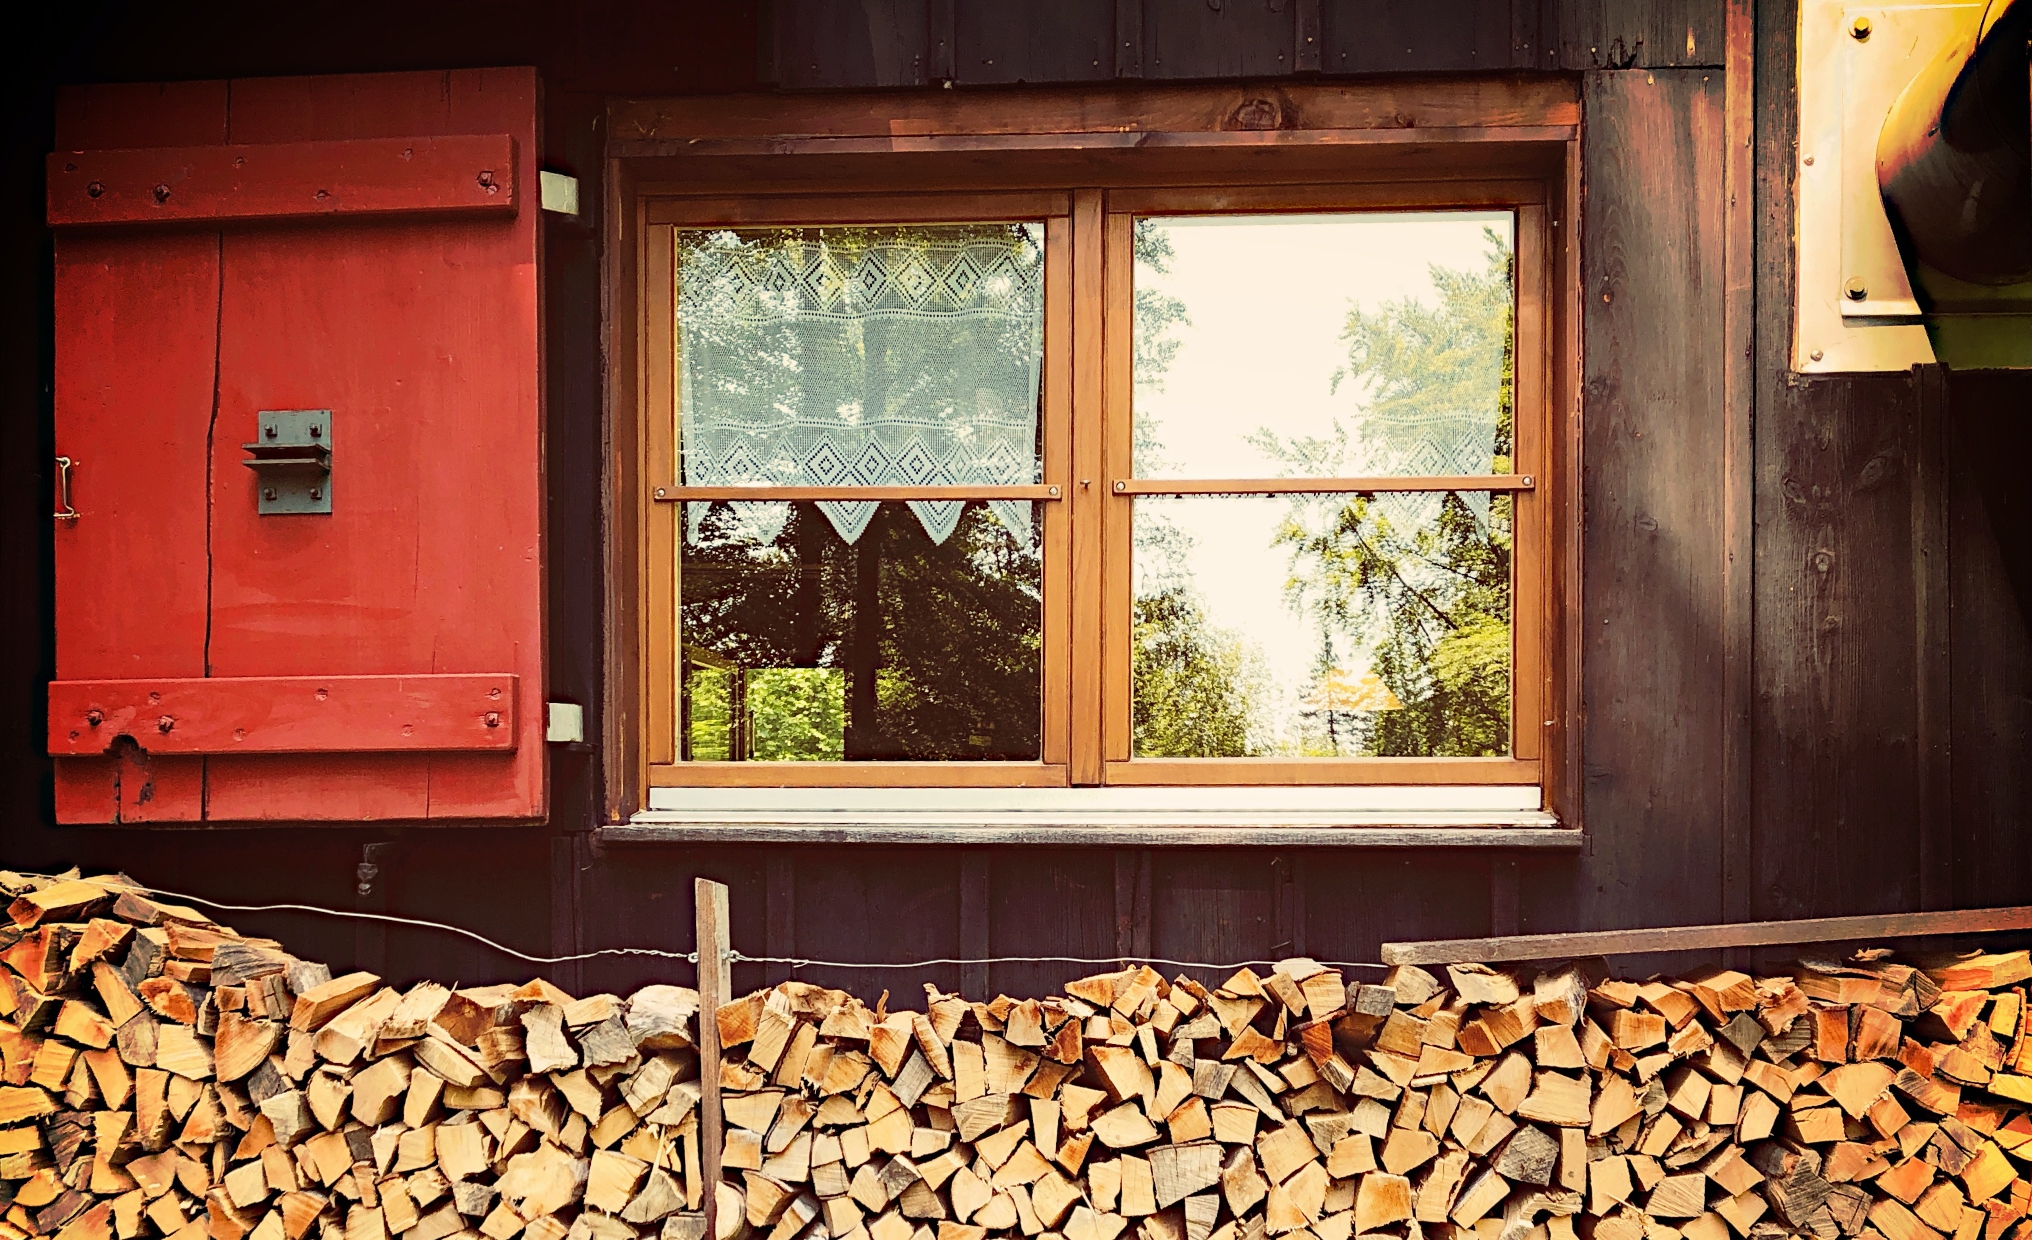 Fenster mit Feuerholz davor